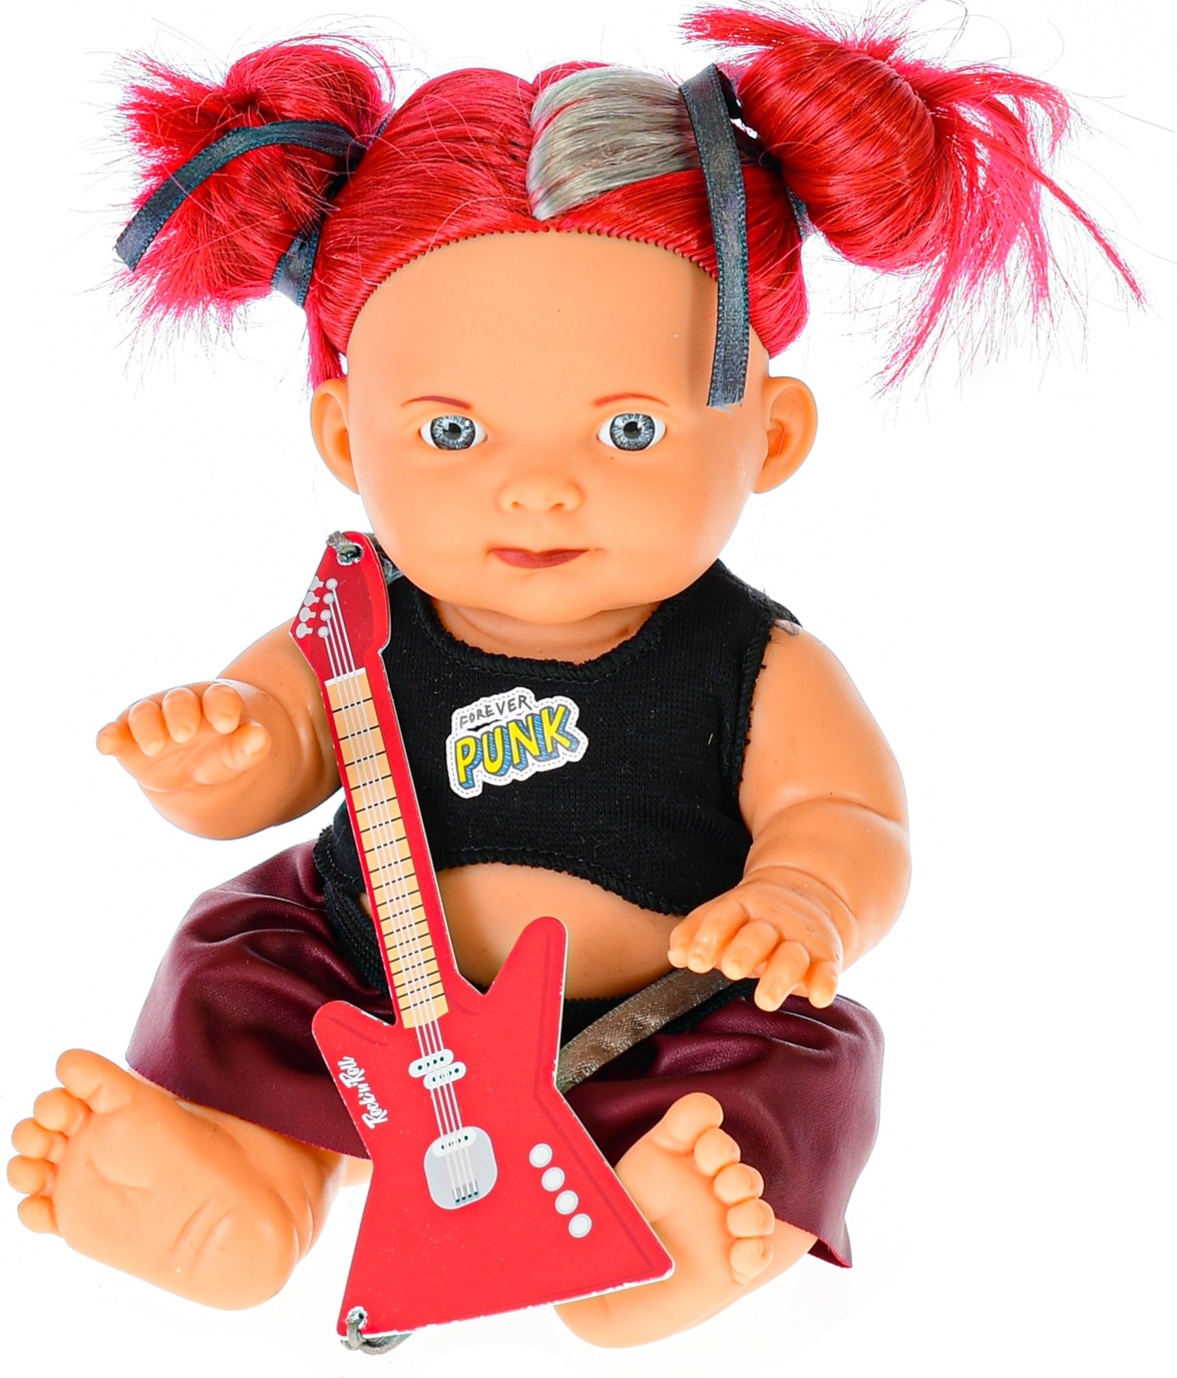 Panenka 23cm s červenými vlasy a kytarou v krabičce